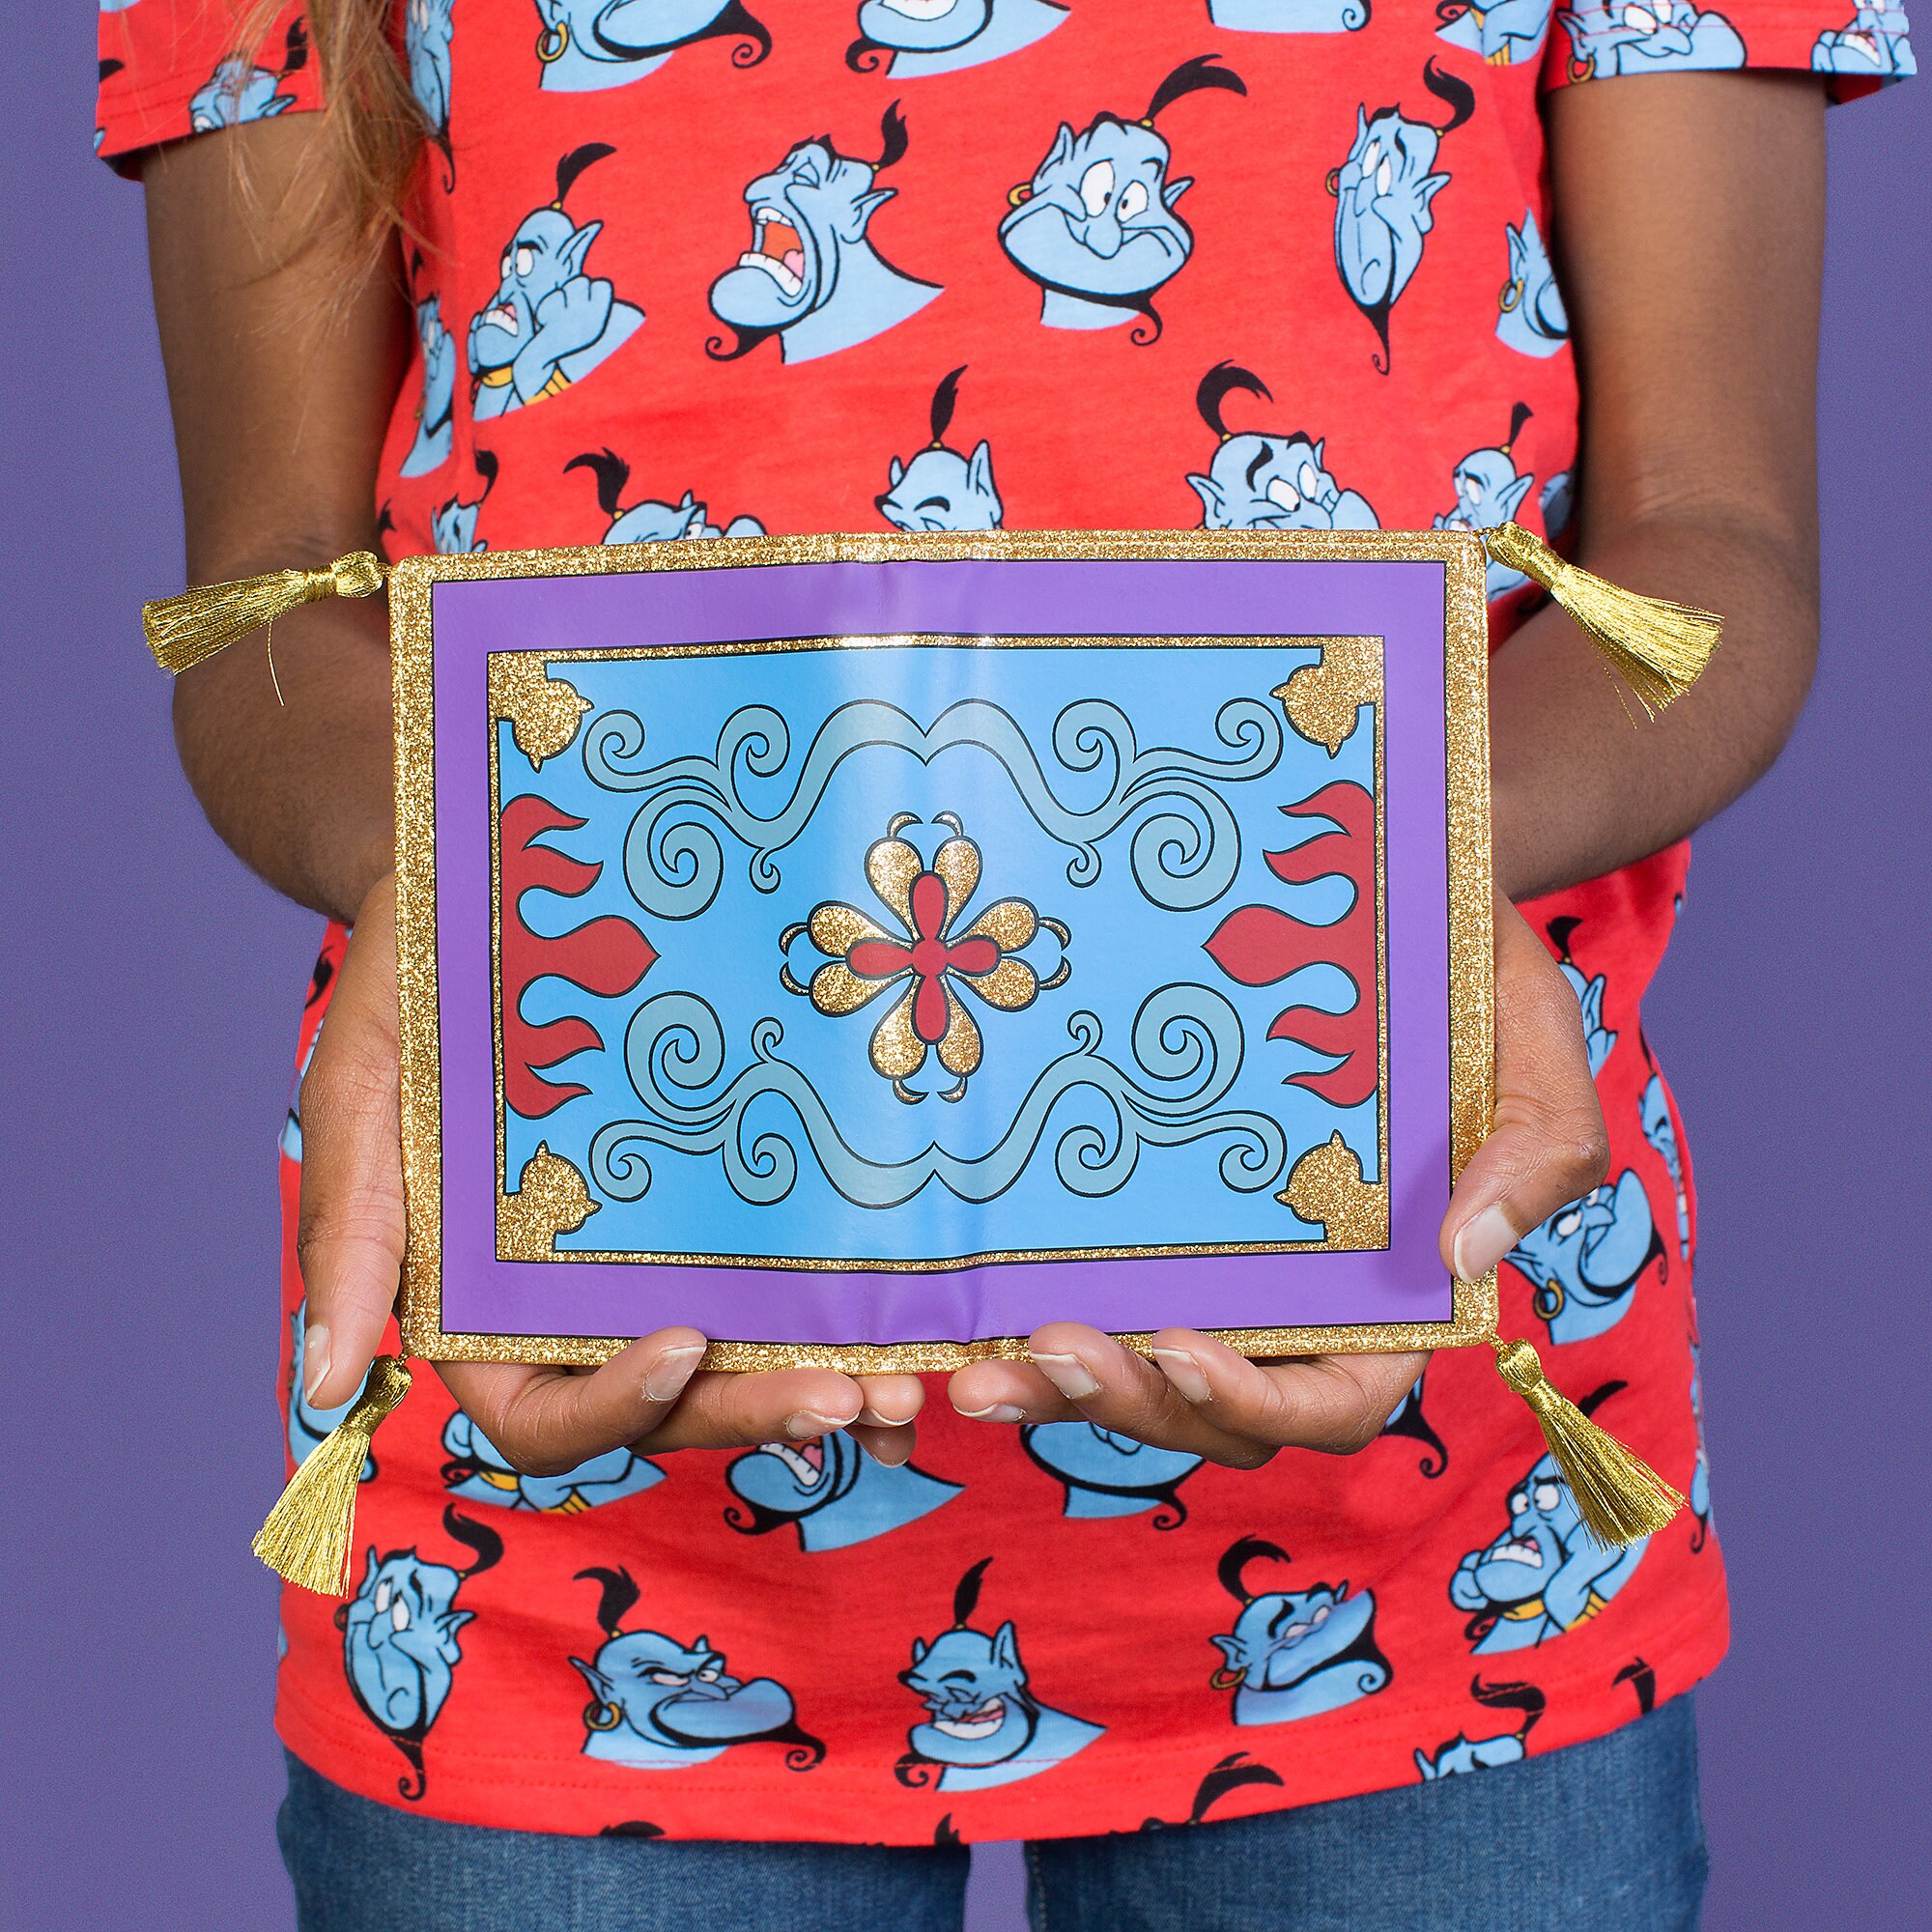 Magic Carpet Passport Holder by Cakeworthy - Aladdin